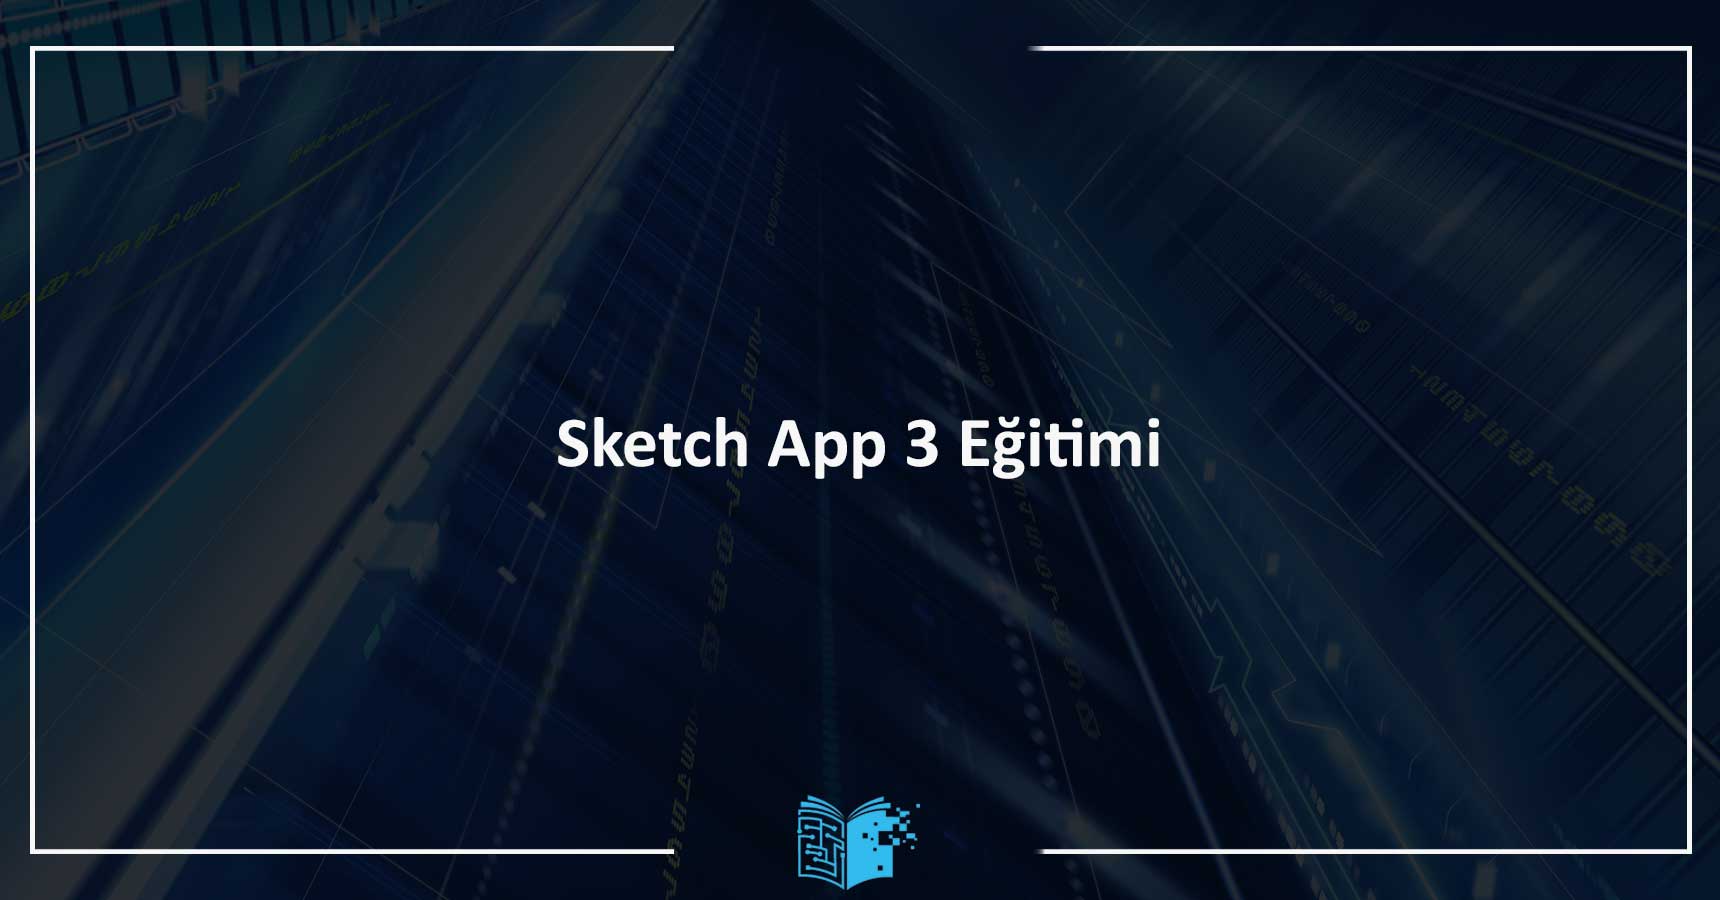 Sketch App 3 Eğitimi